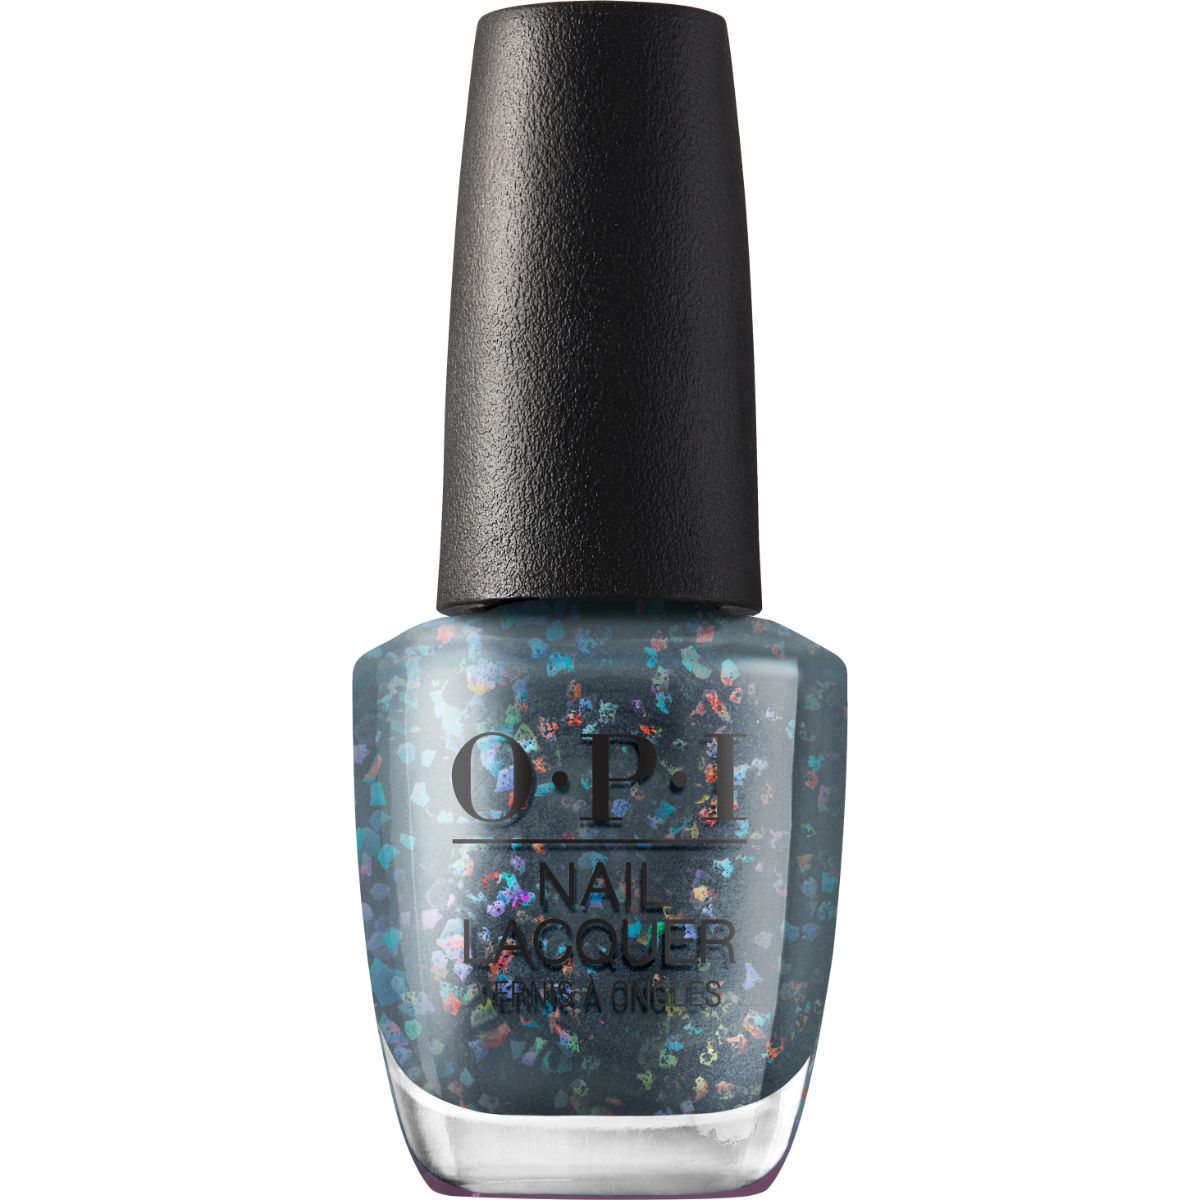 OPI Nail Lacquer Polish - Shine Bright Collection - Glitter - Puttin' on the Glitz, 0.5 oz - #HRM15 - image 1 of 4